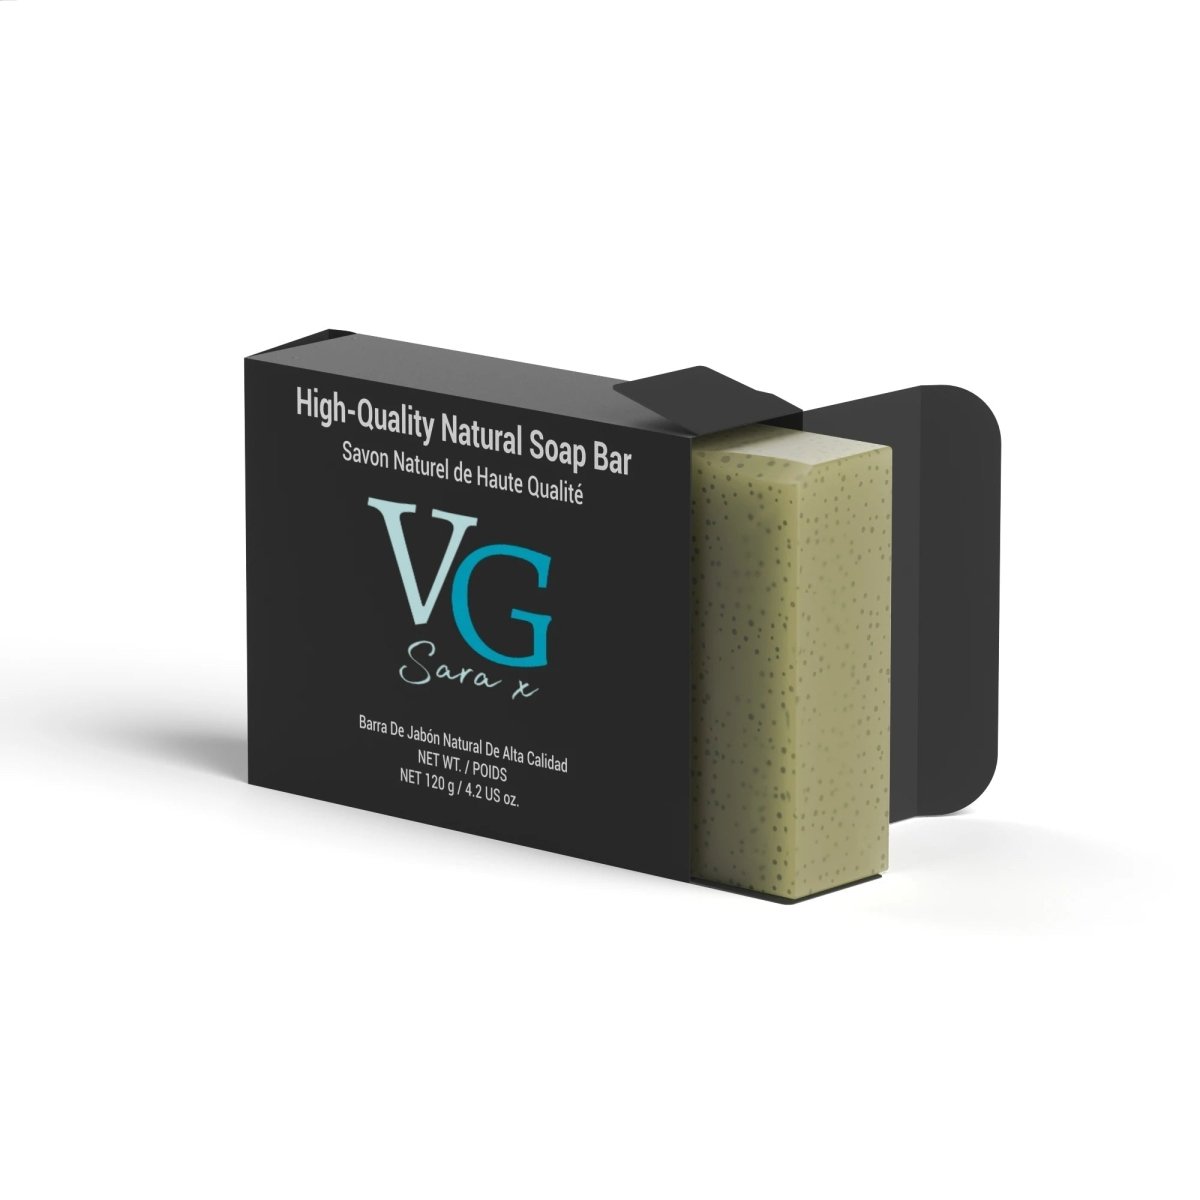 natural cnadian soap bar in a black box with a logo VG Sara x